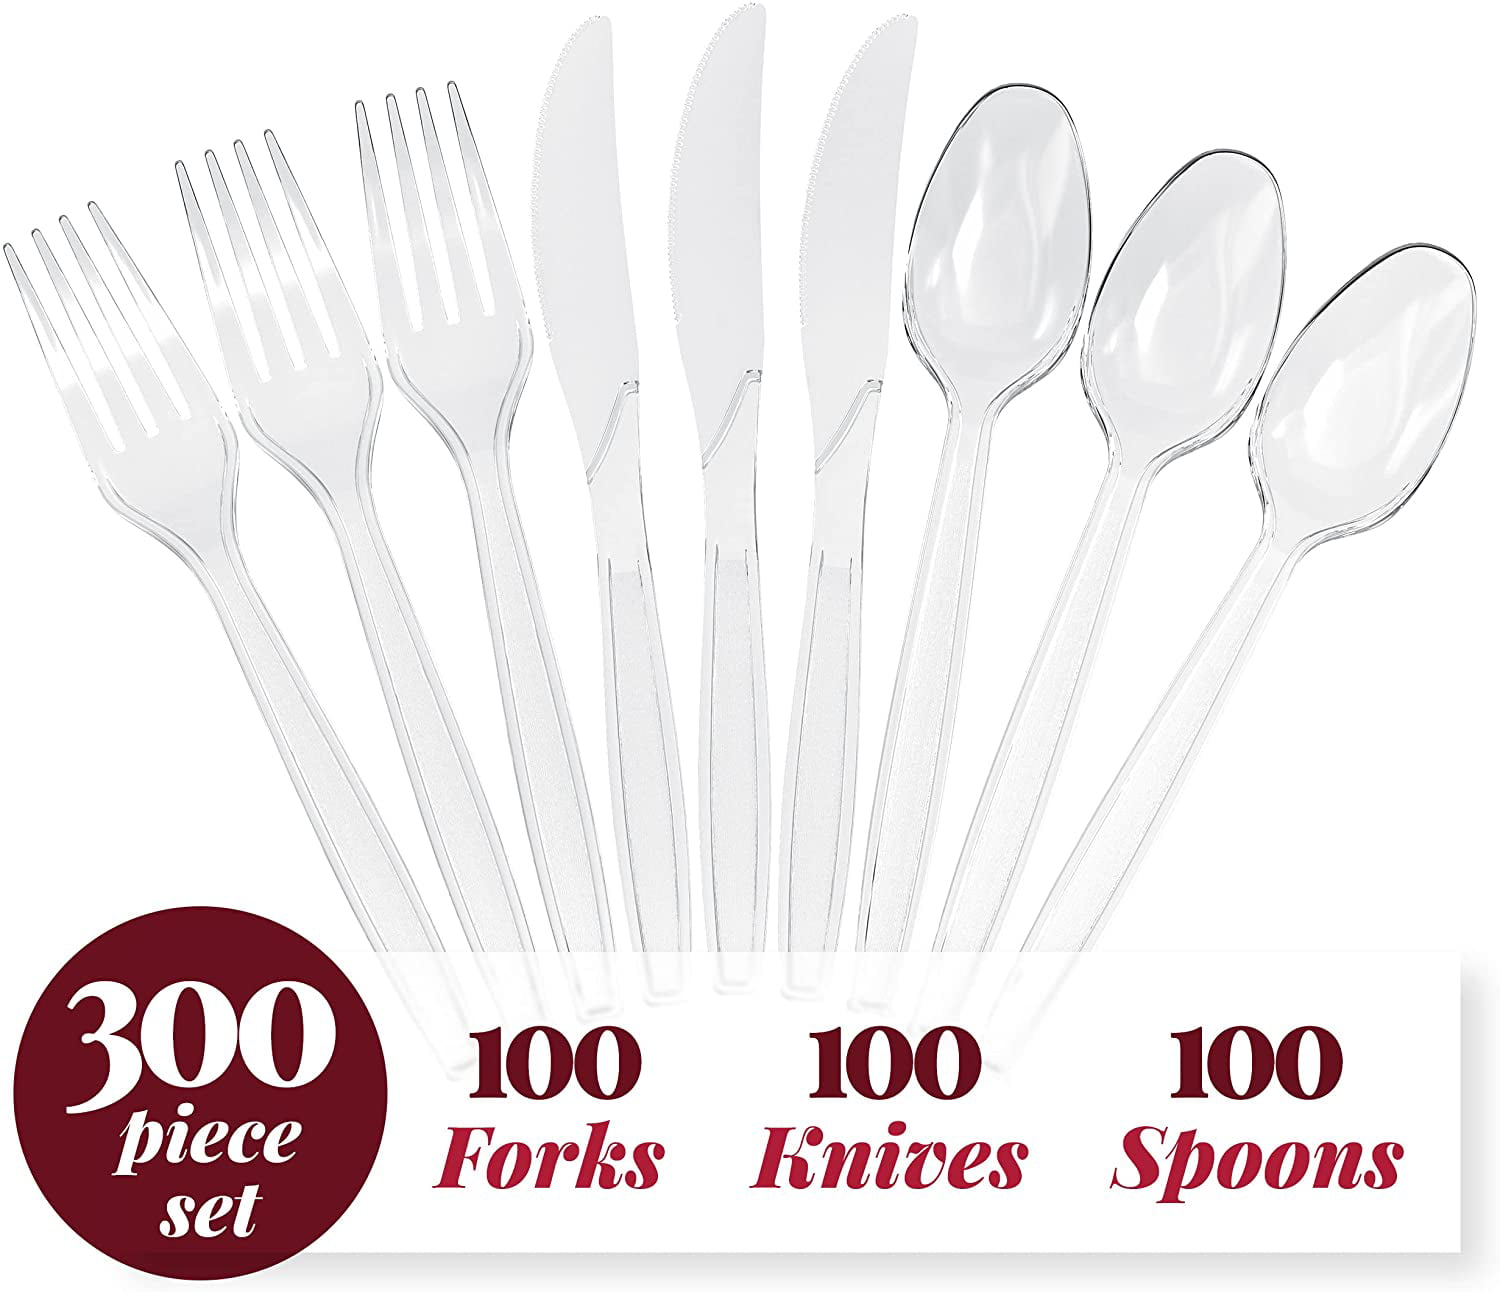 Prestee 300 Plastic Silverware Set, Clear Plastic Cutlery Set, Disposable  Set - 100 Plastic Forks, 1…See more Prestee 300 Plastic Silverware Set